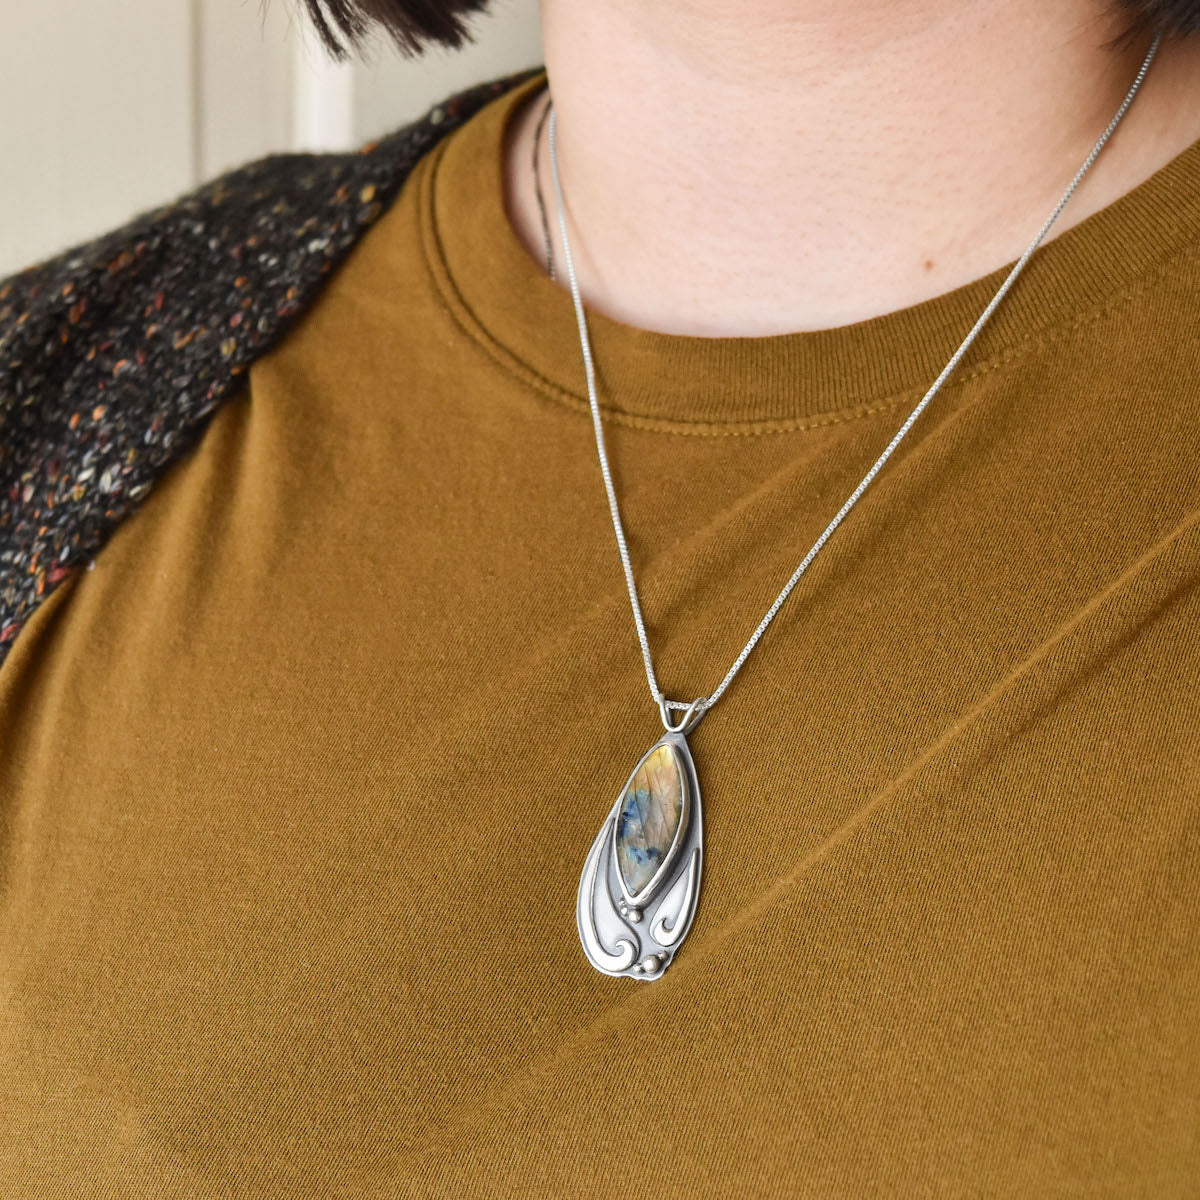 Superior Gales Labradorite Wonderland Pendant No. 1 - Silver Pendant   5791 - handmade by Beth Millner Jewelry